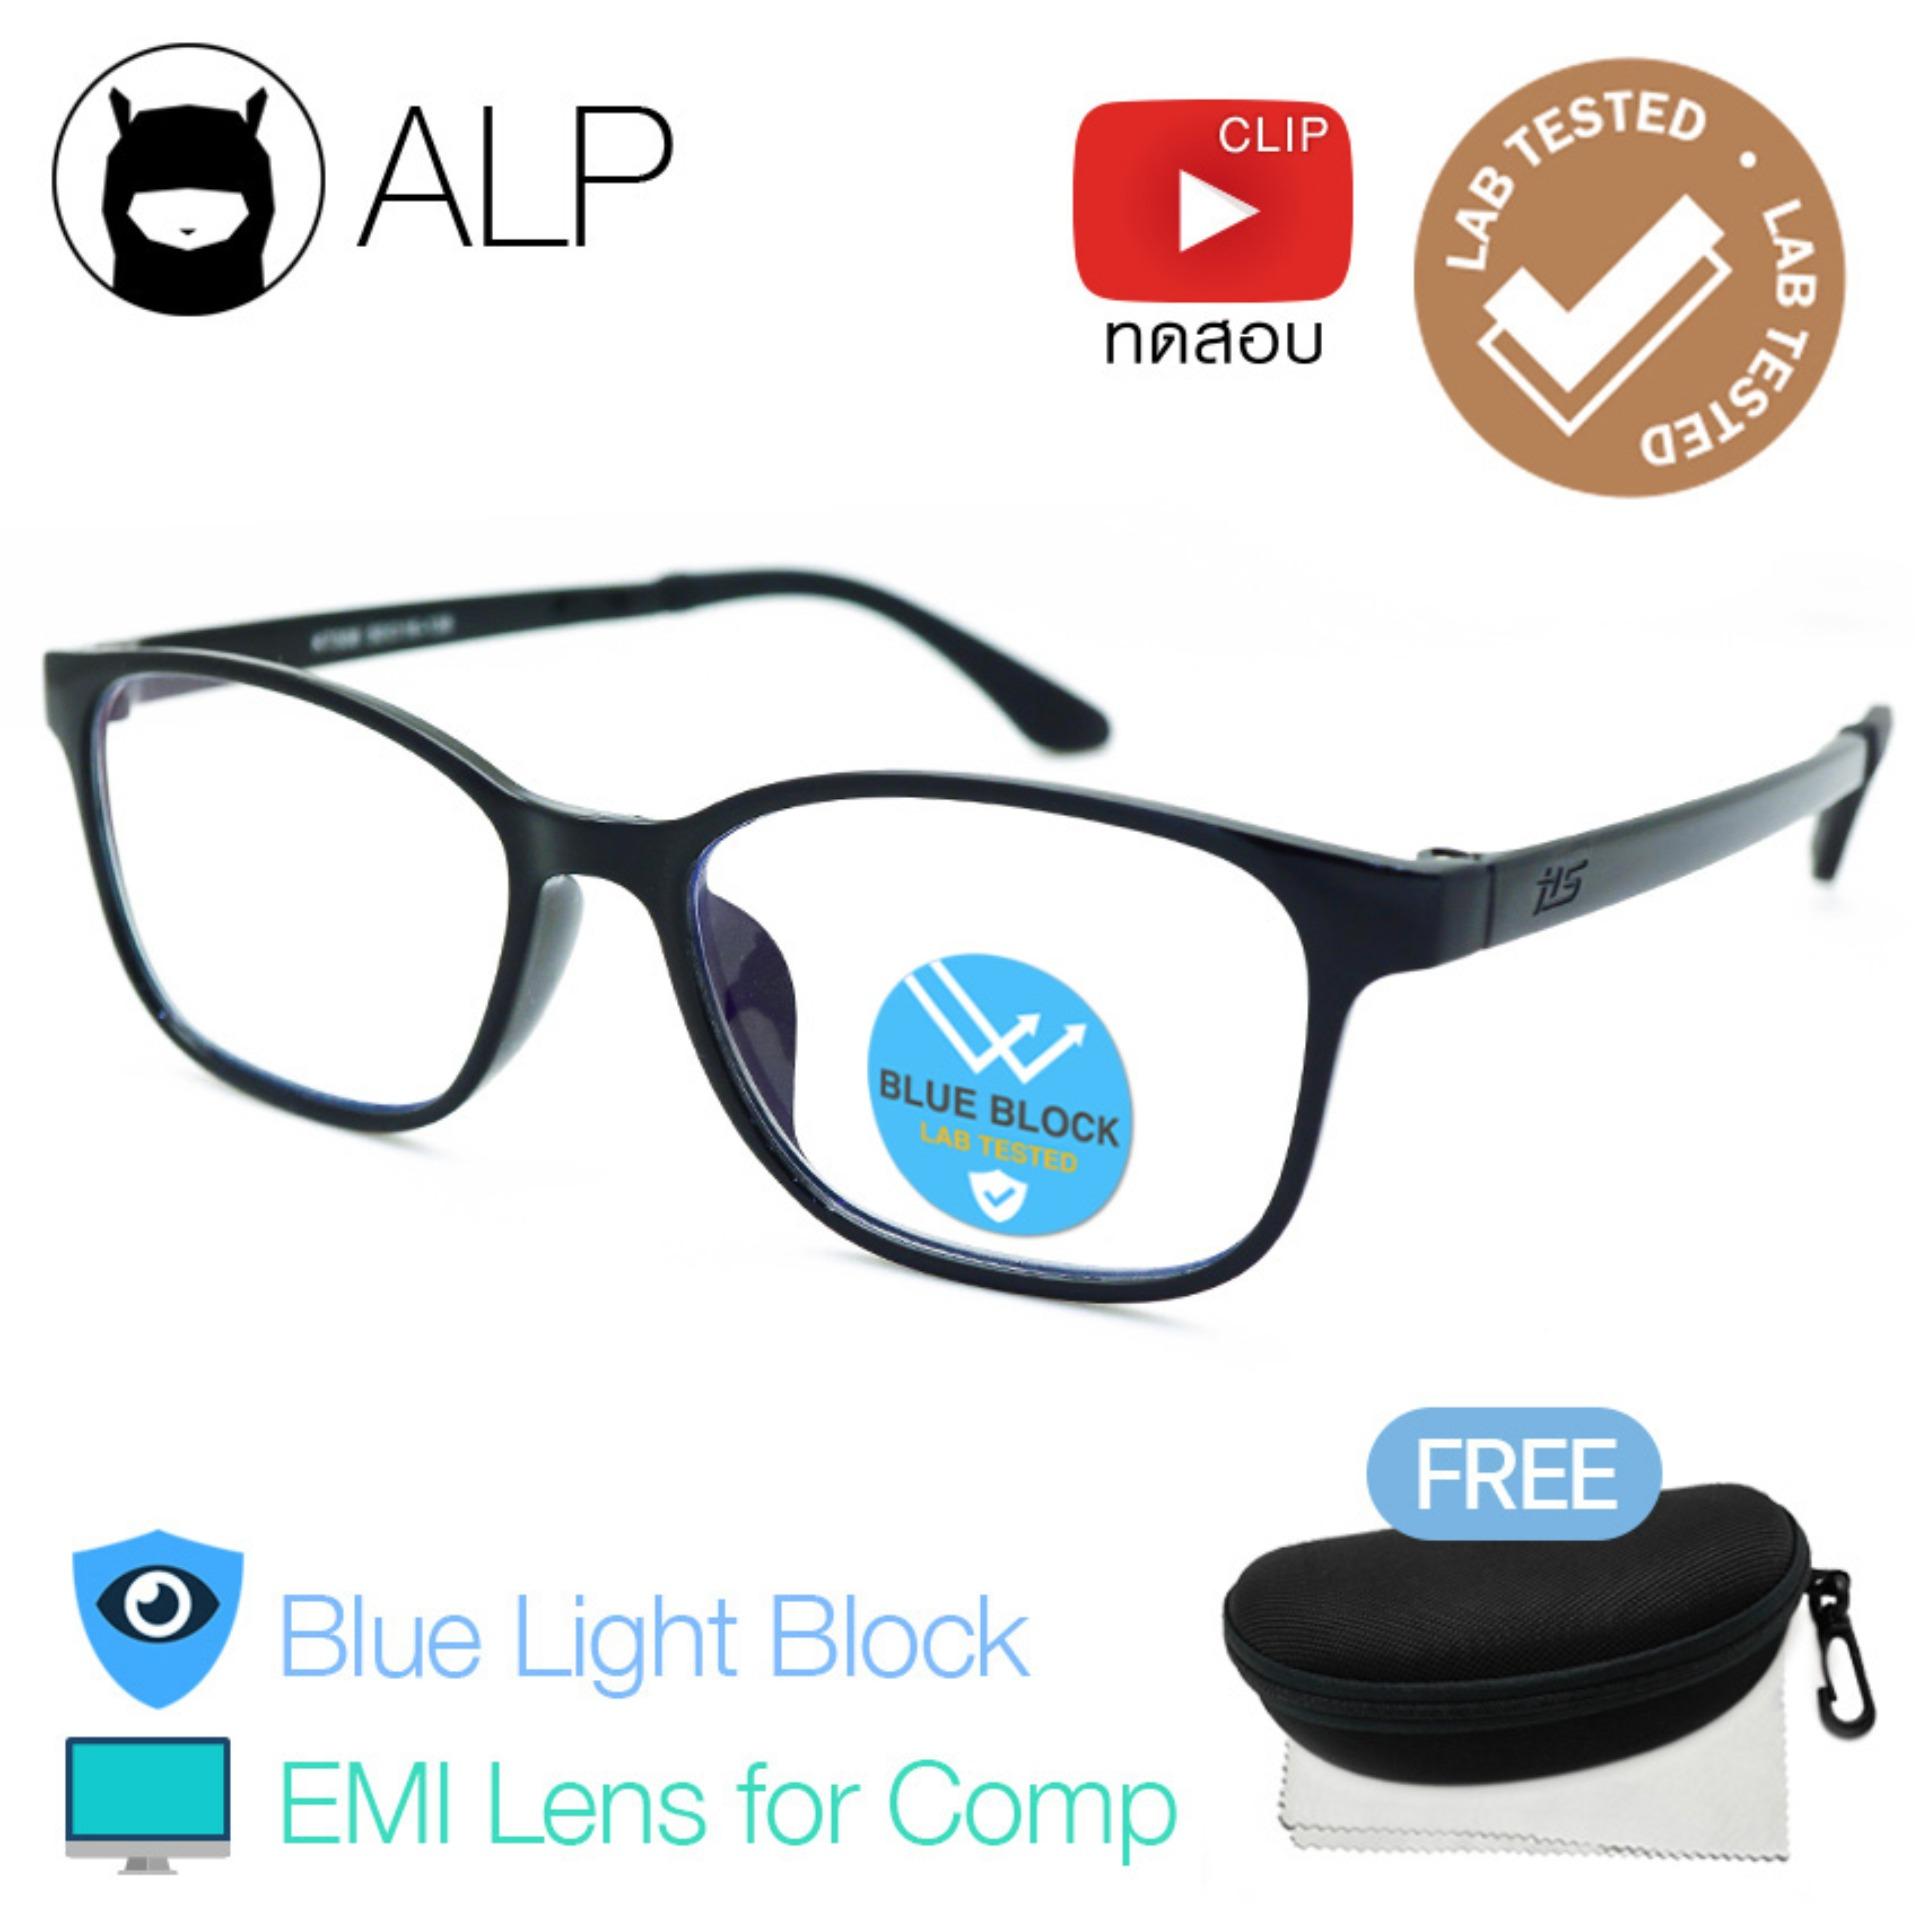 ALP EMI Computer Glasses แว่นคอมพิวเตอร์ กรองแสงสีฟ้า Blue Light Block  กันรังสี UV, UVA, UVB กรอบแว่นตา แว่นสายตา แว่นเลนส์ใส Square Style รุ่น ALP-E014-BKS-EMI (Black/Clear)